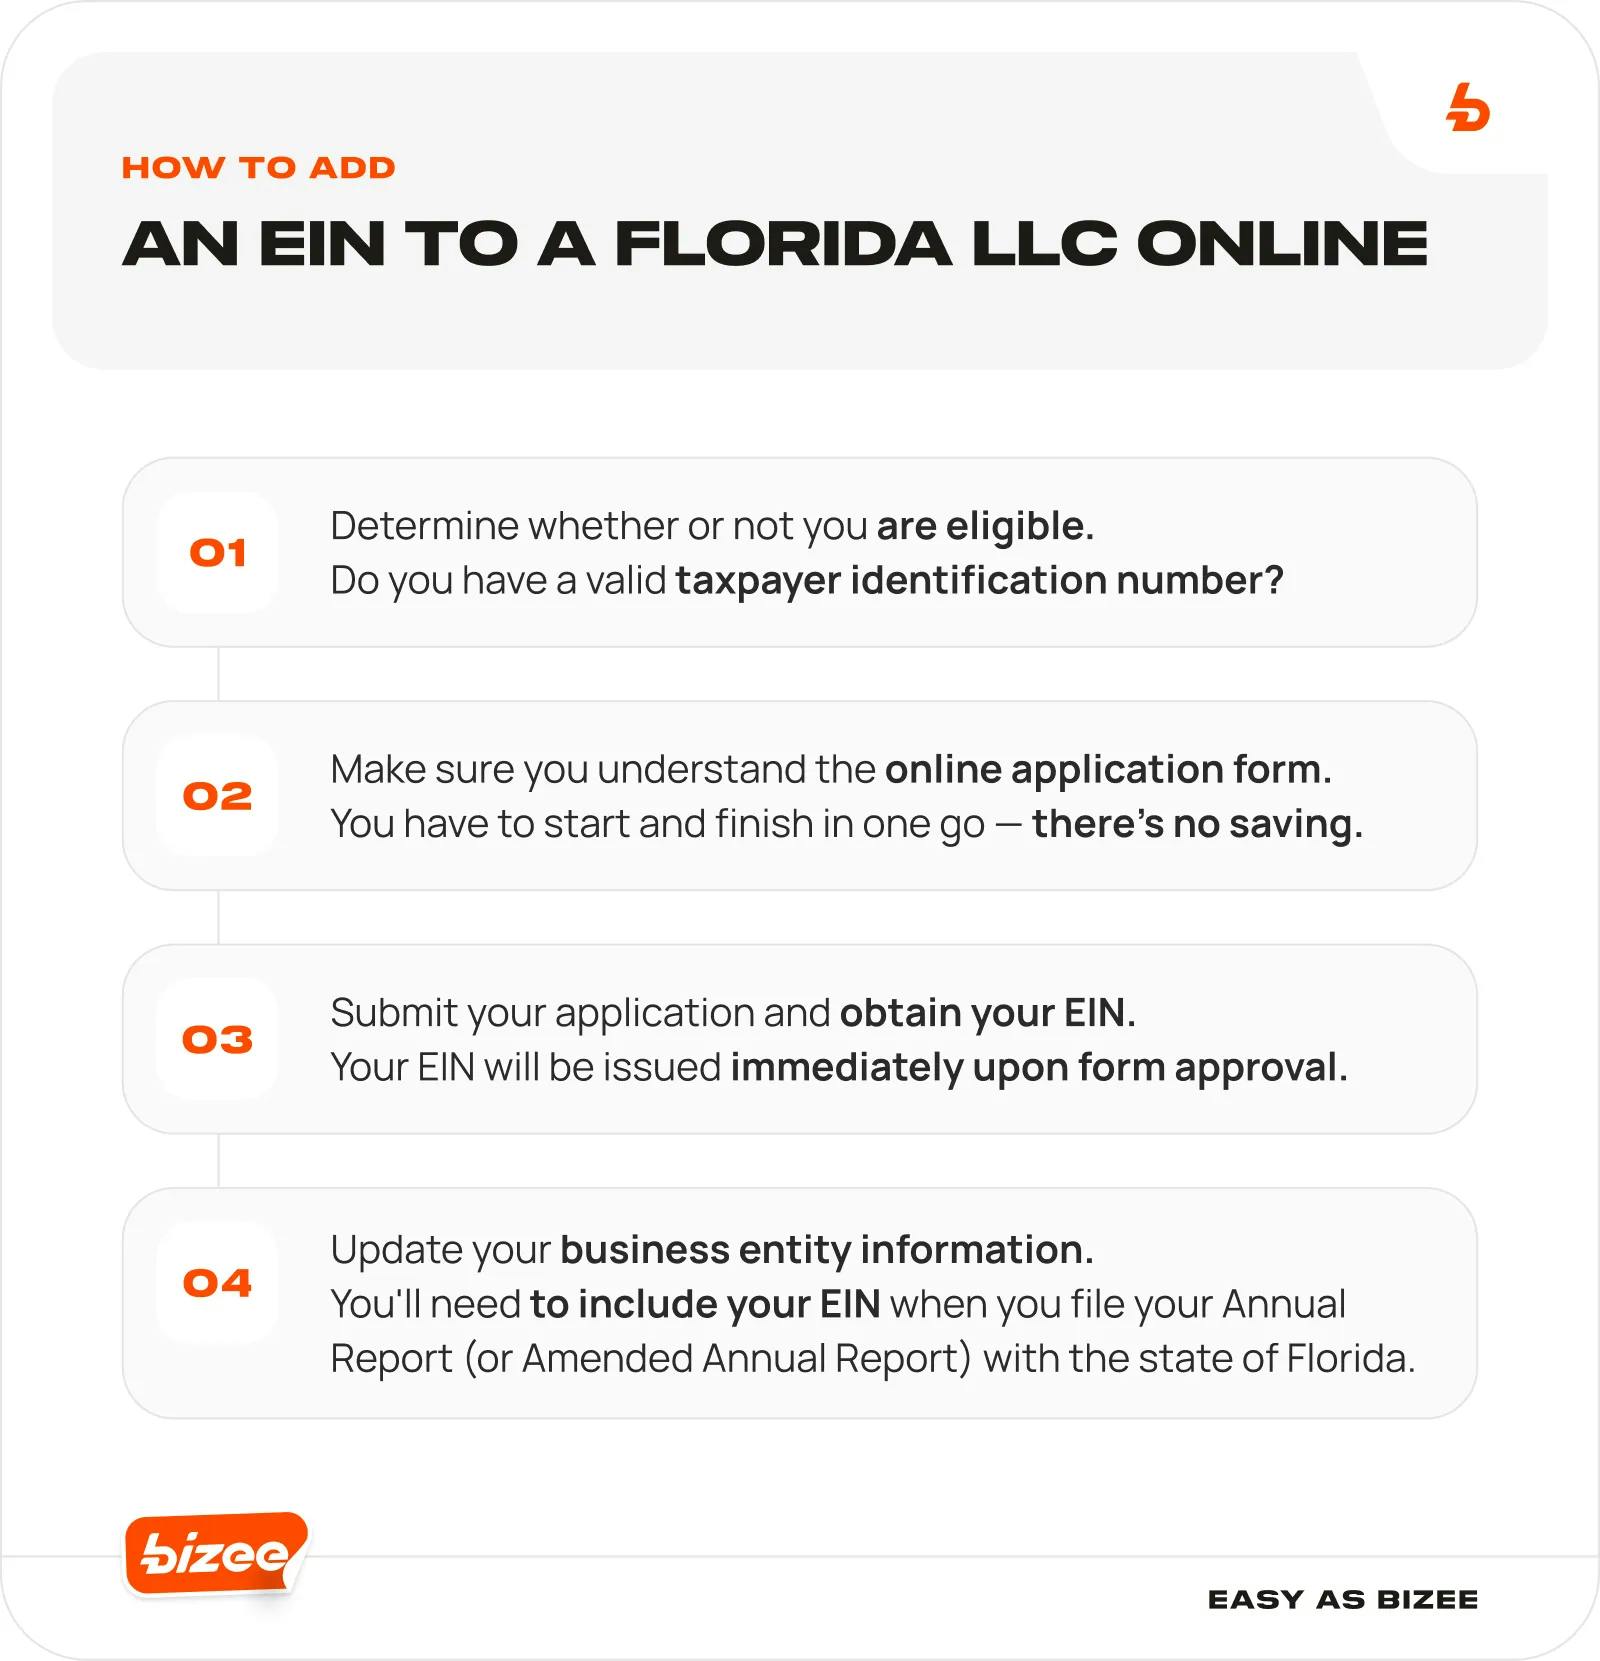 How to Add an EIN to a Florida LLC Online